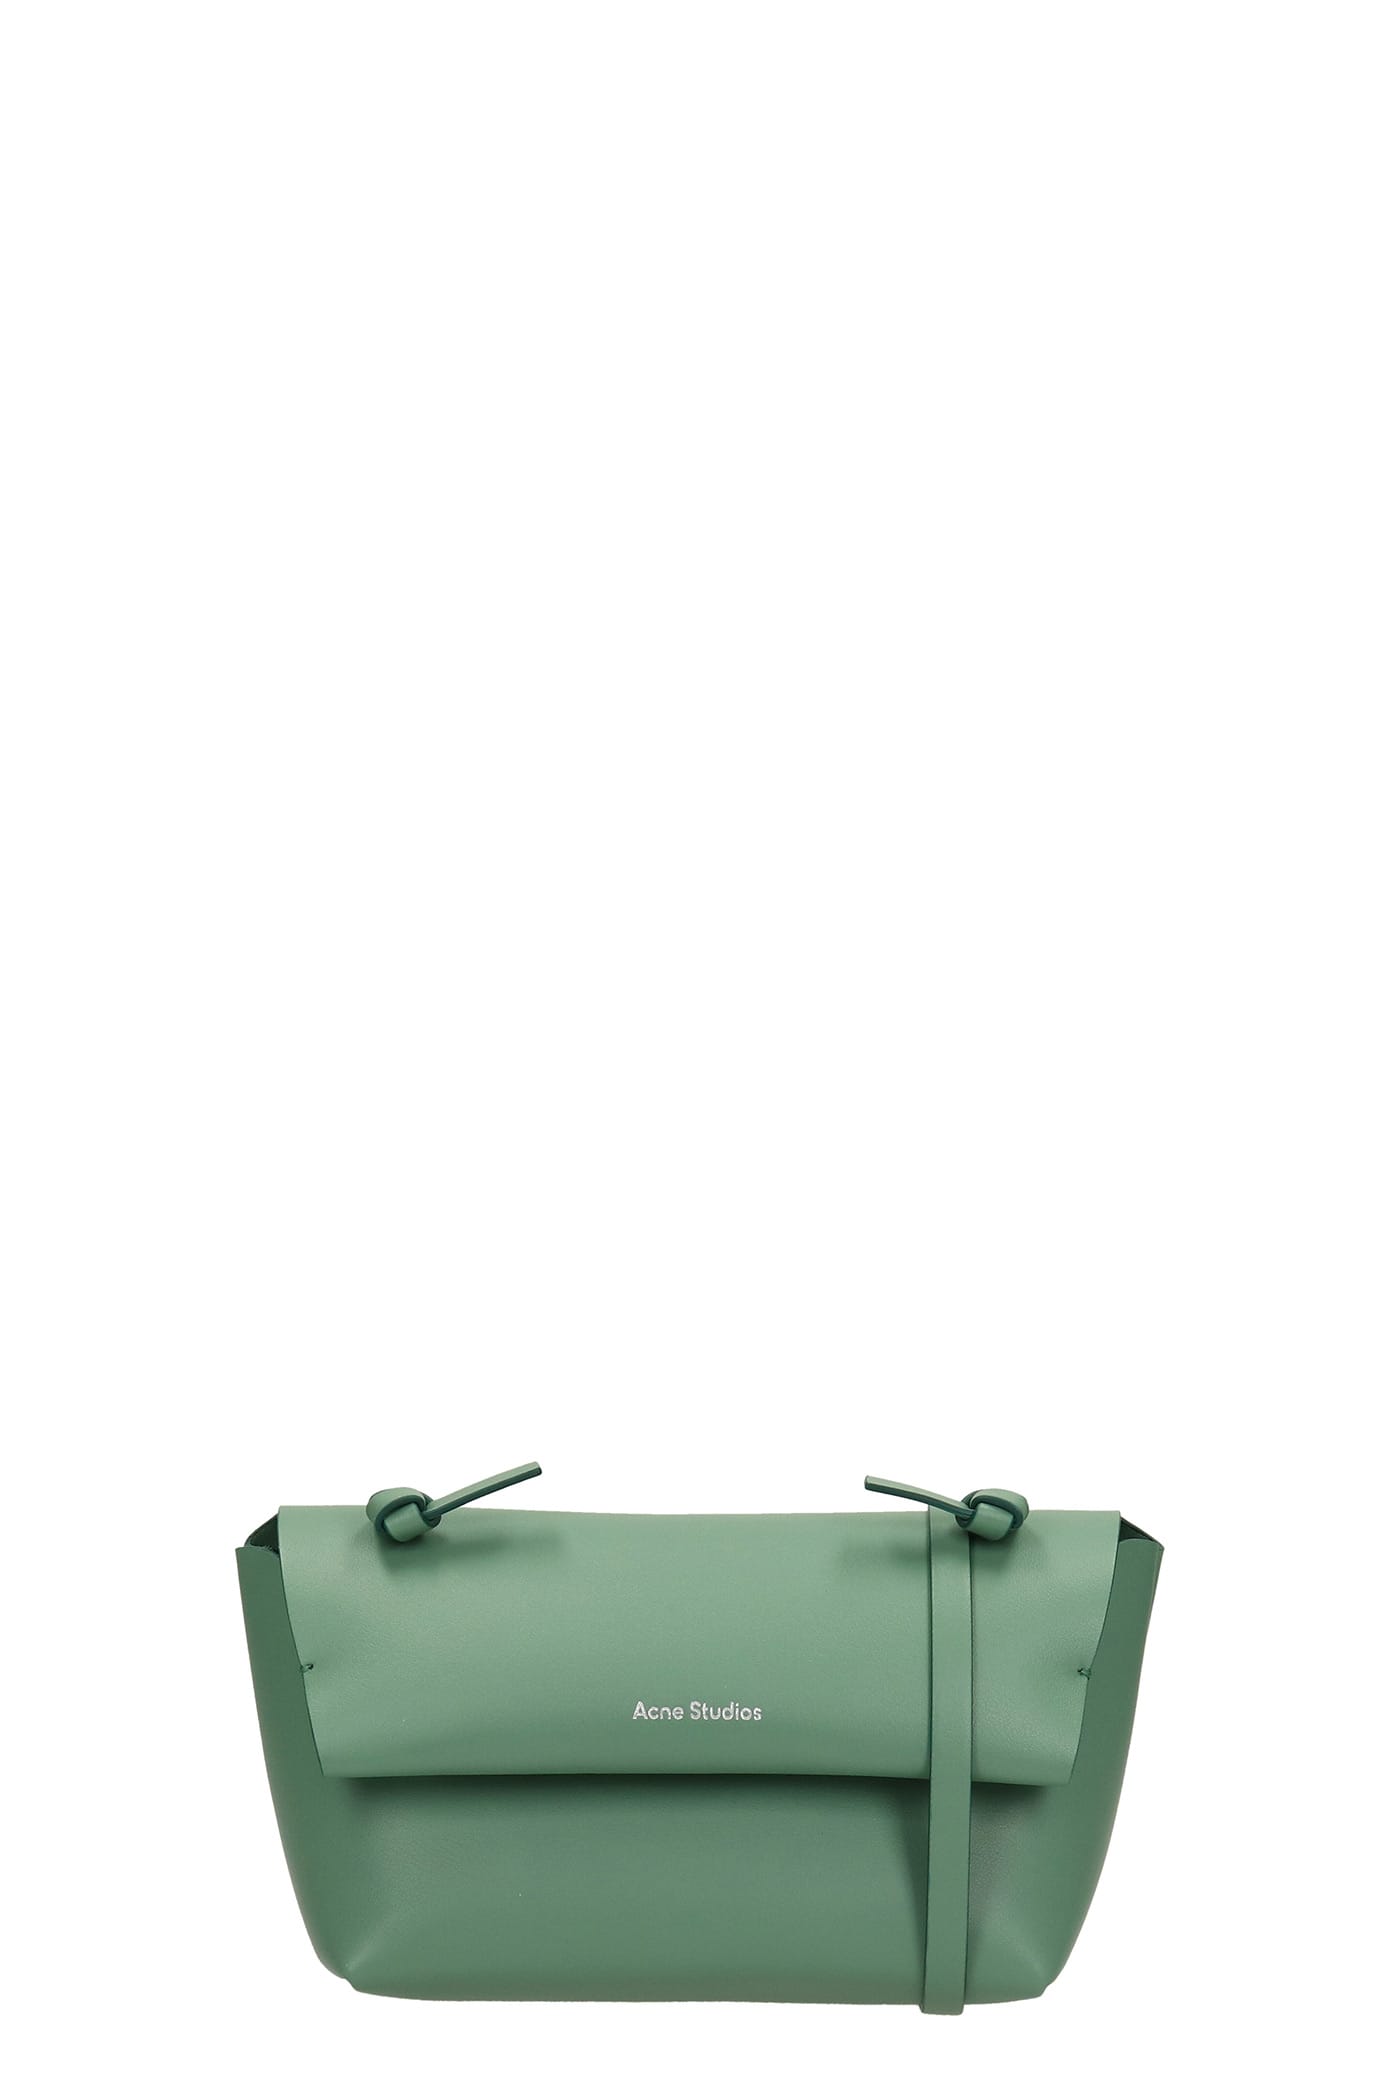 Acne Studios Alexandria Larg Shoulder Bag In Green Leather